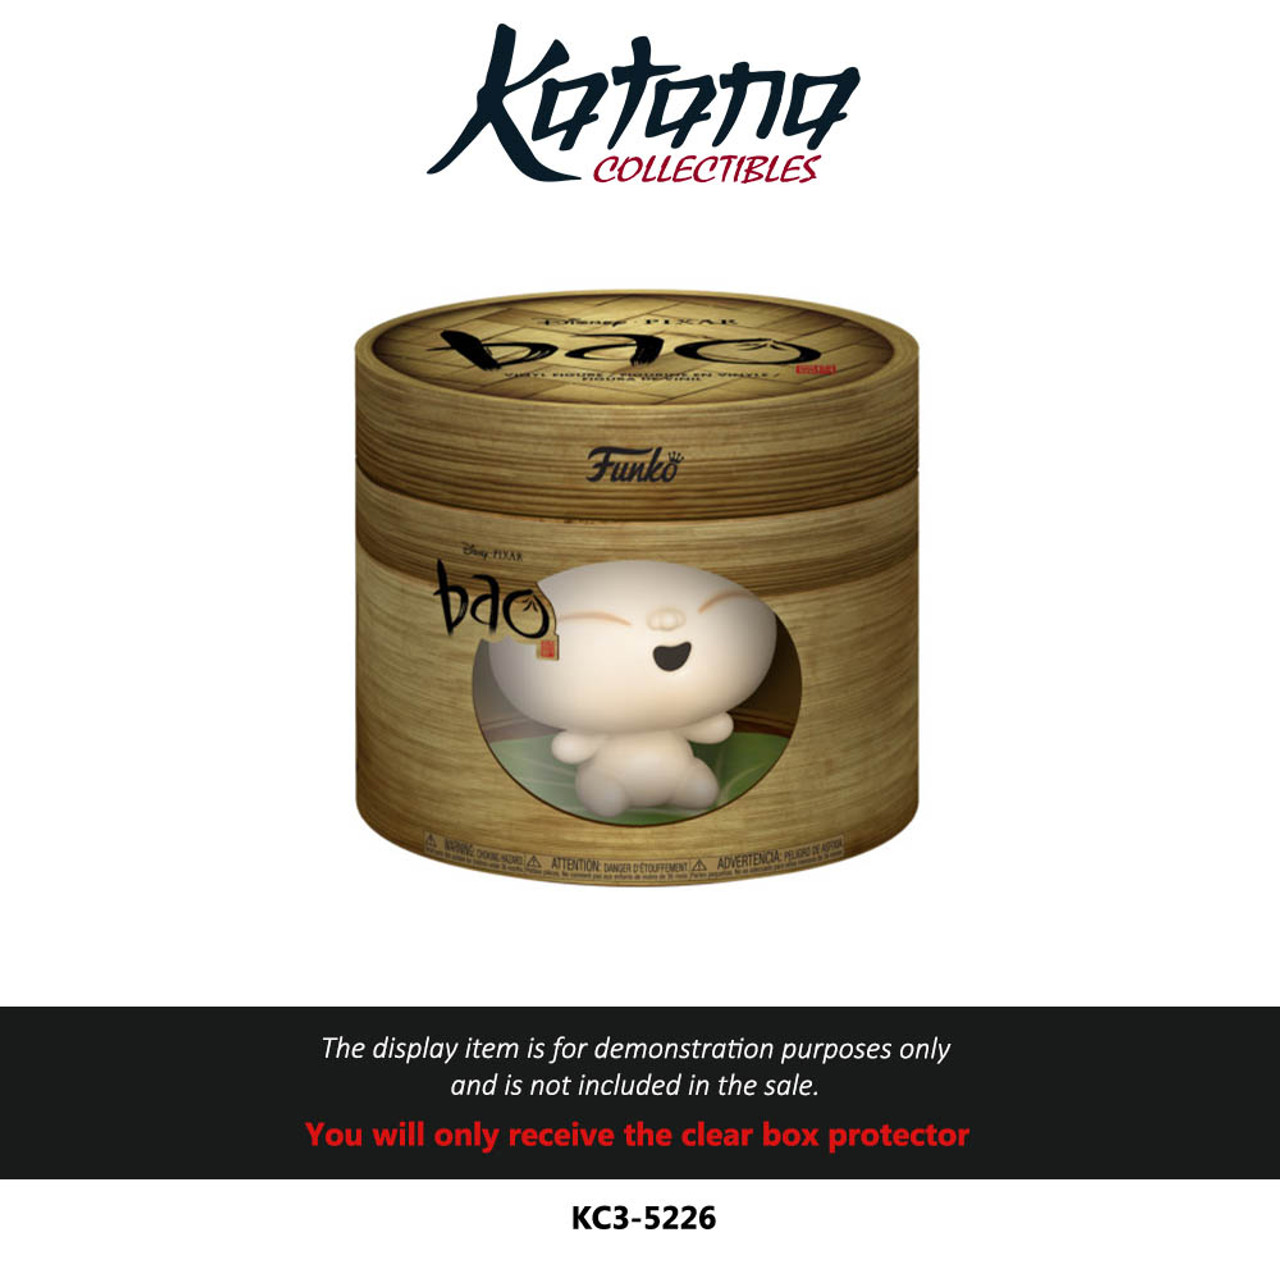 Katana Collectibles Protector For Funko POP! Disney Pixar Bao Dumpling Vinyl Figure